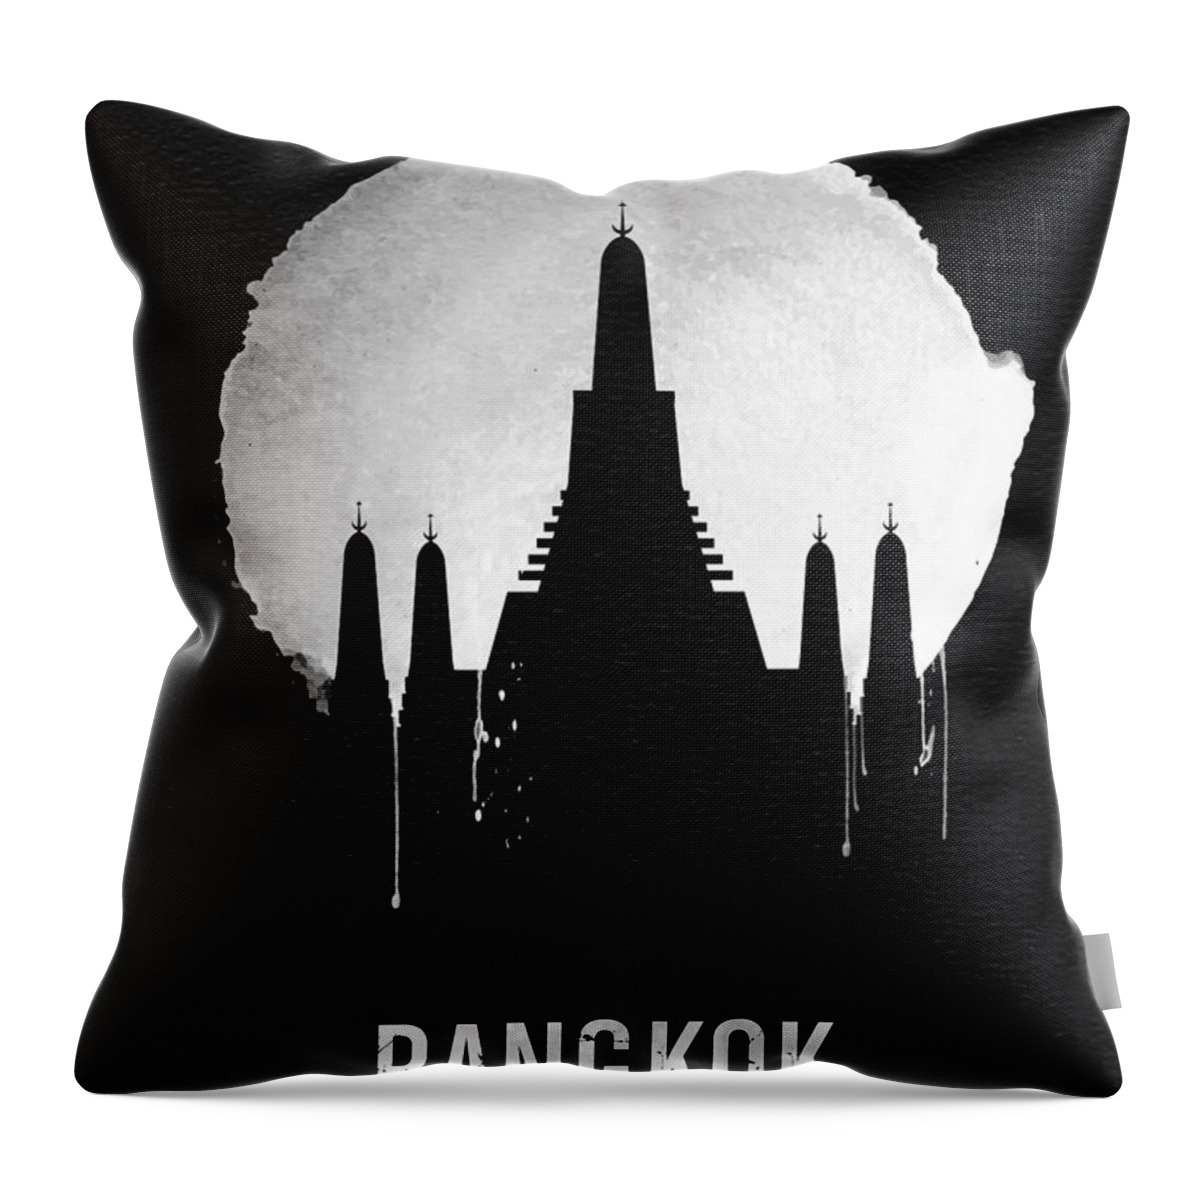 Bangkok Throw Pillow featuring the digital art Bangkok Landmark Black by Naxart Studio